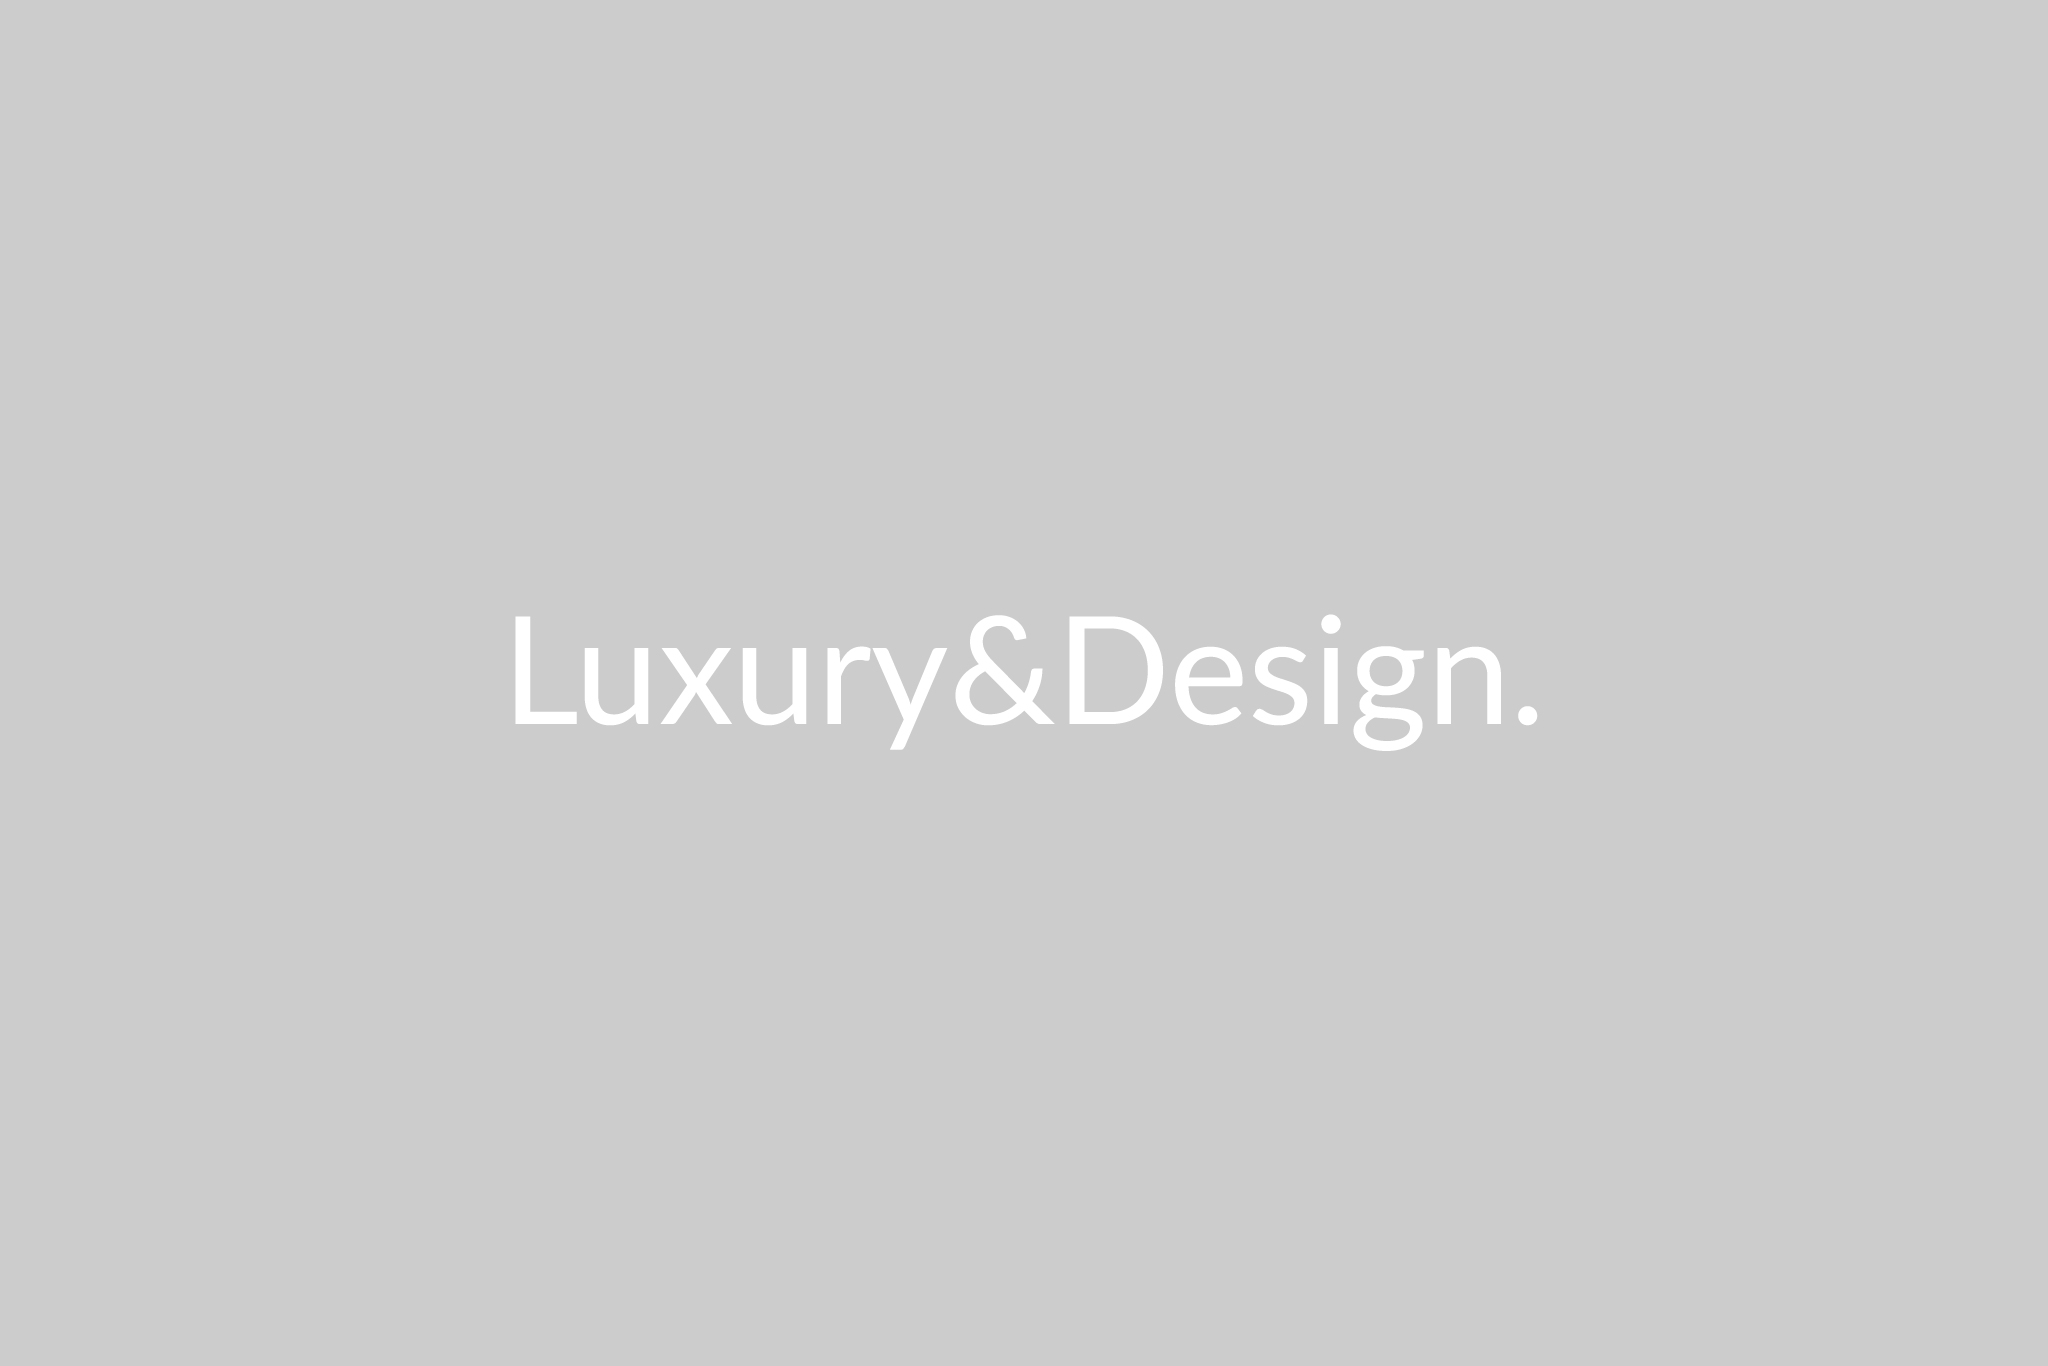 Luxury&Design style